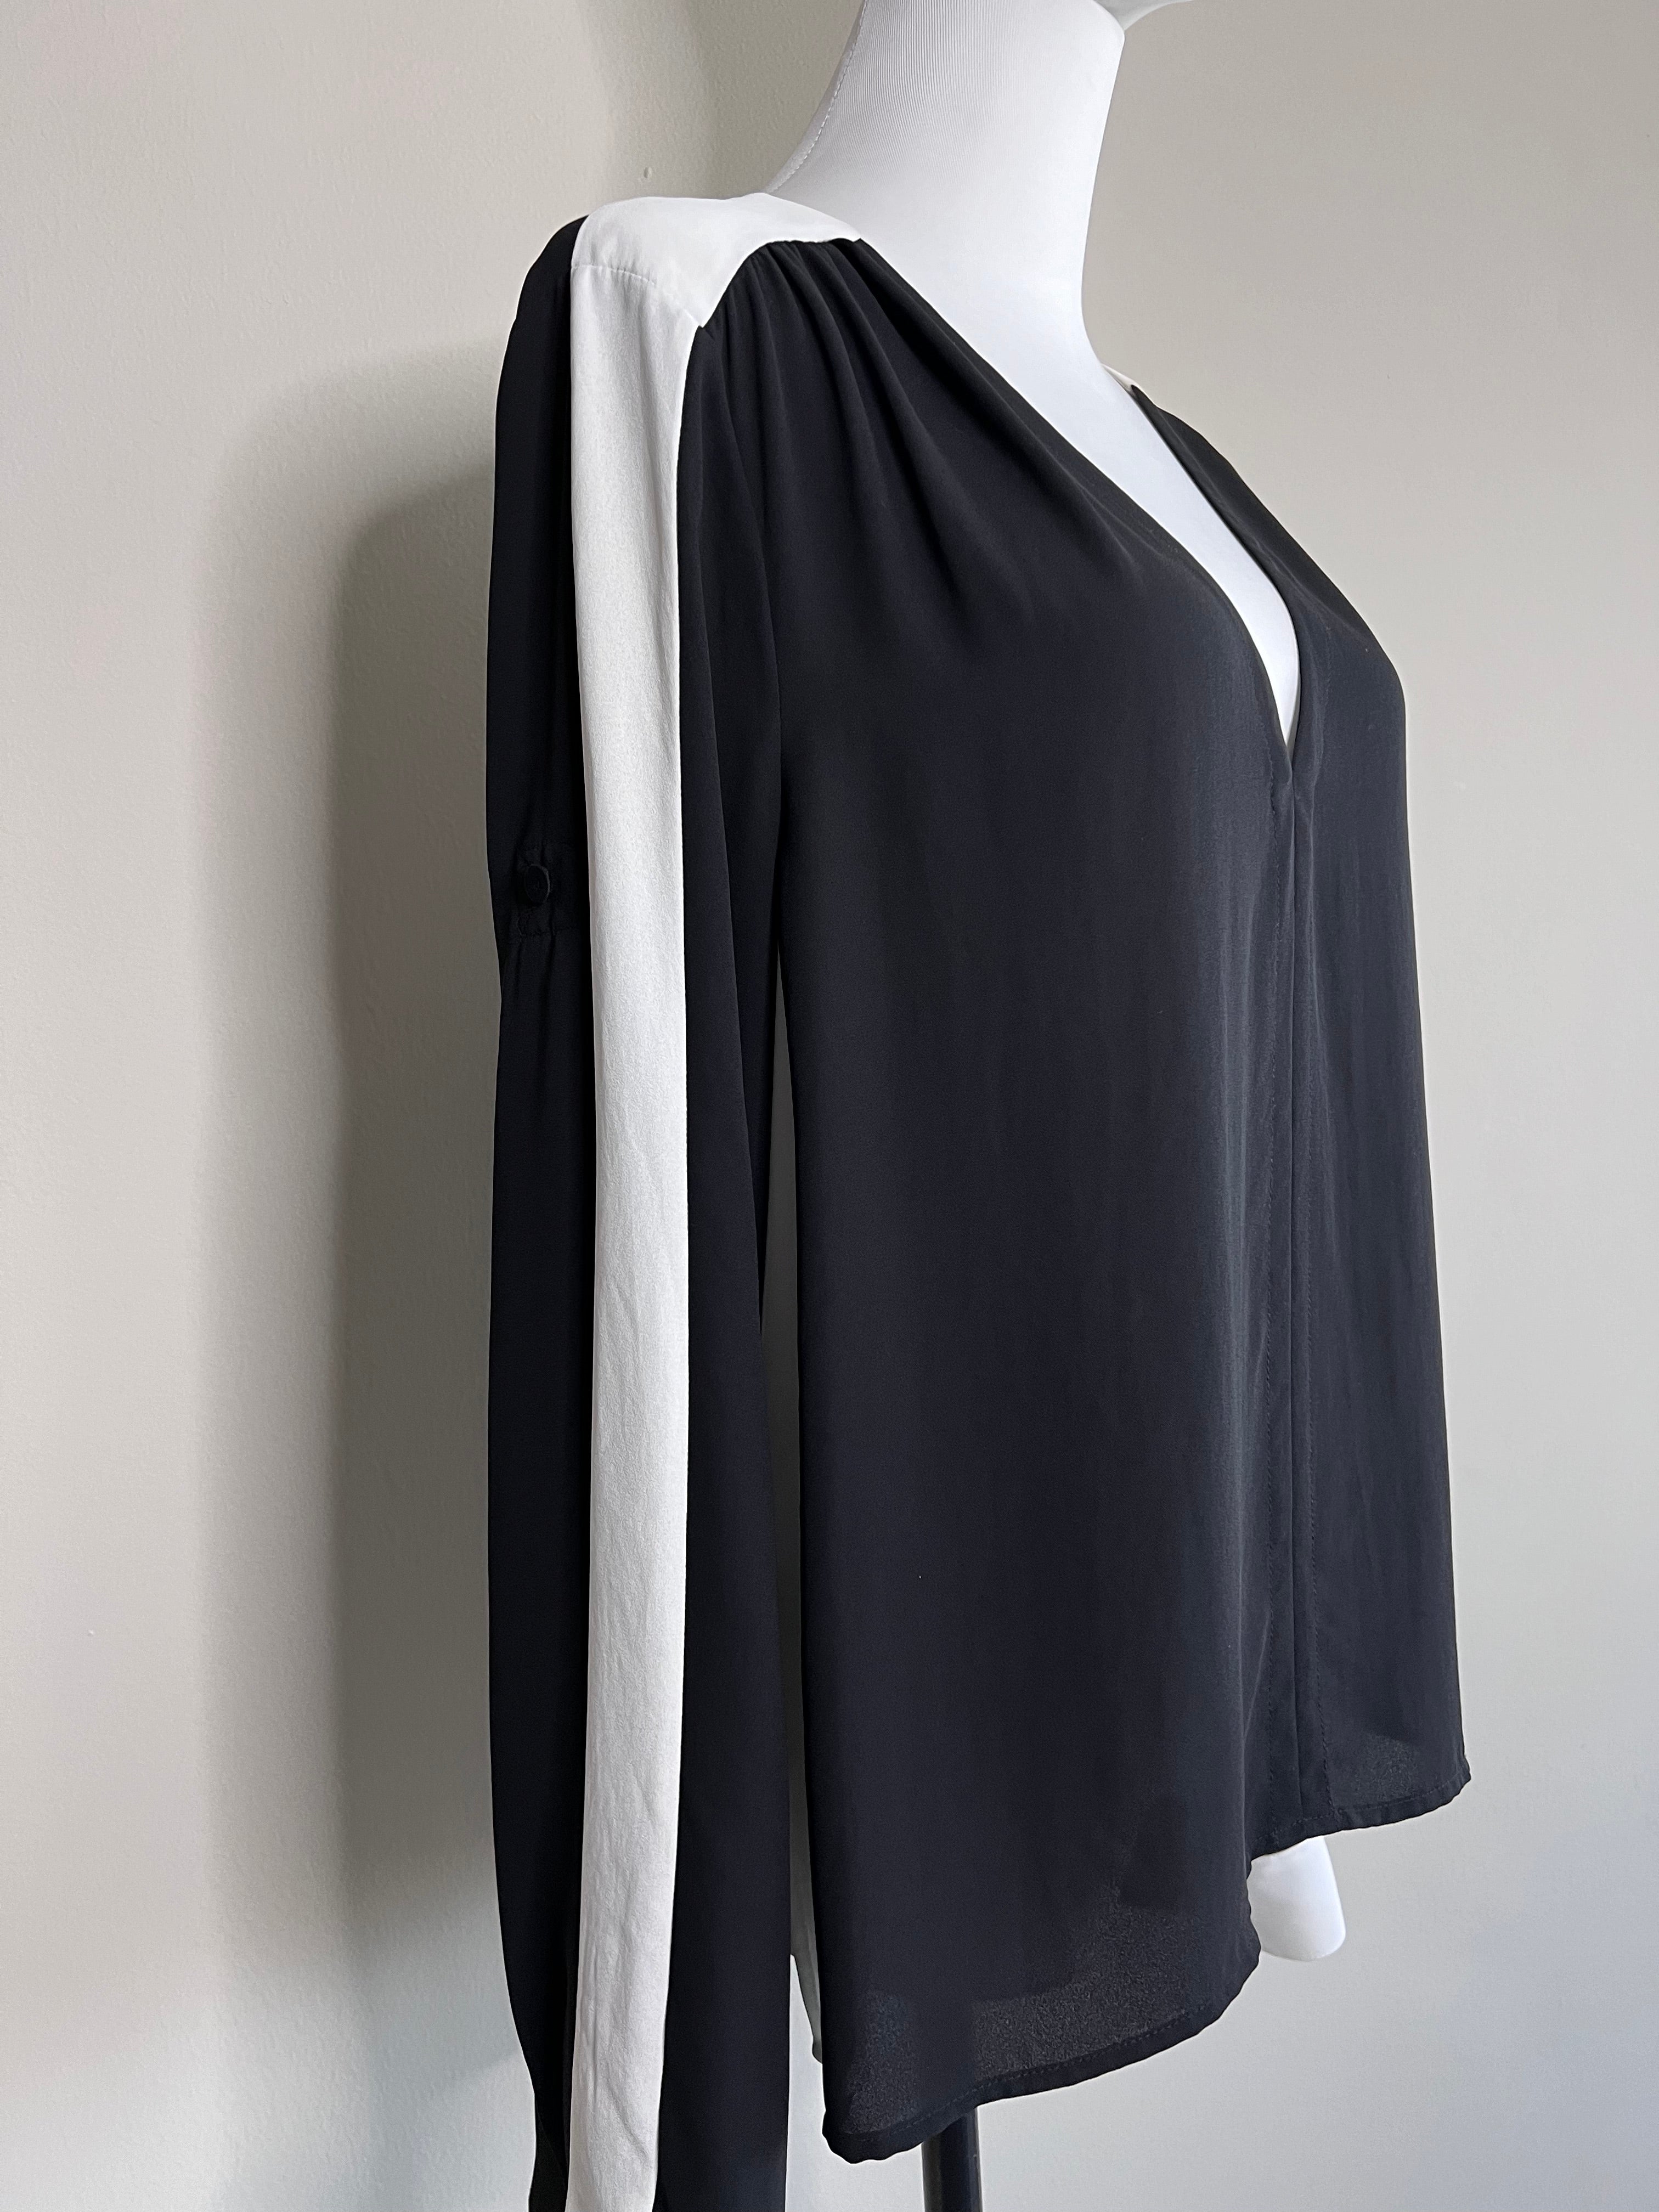 Black alaine blouse with white line - BCBGMAXAZRIA